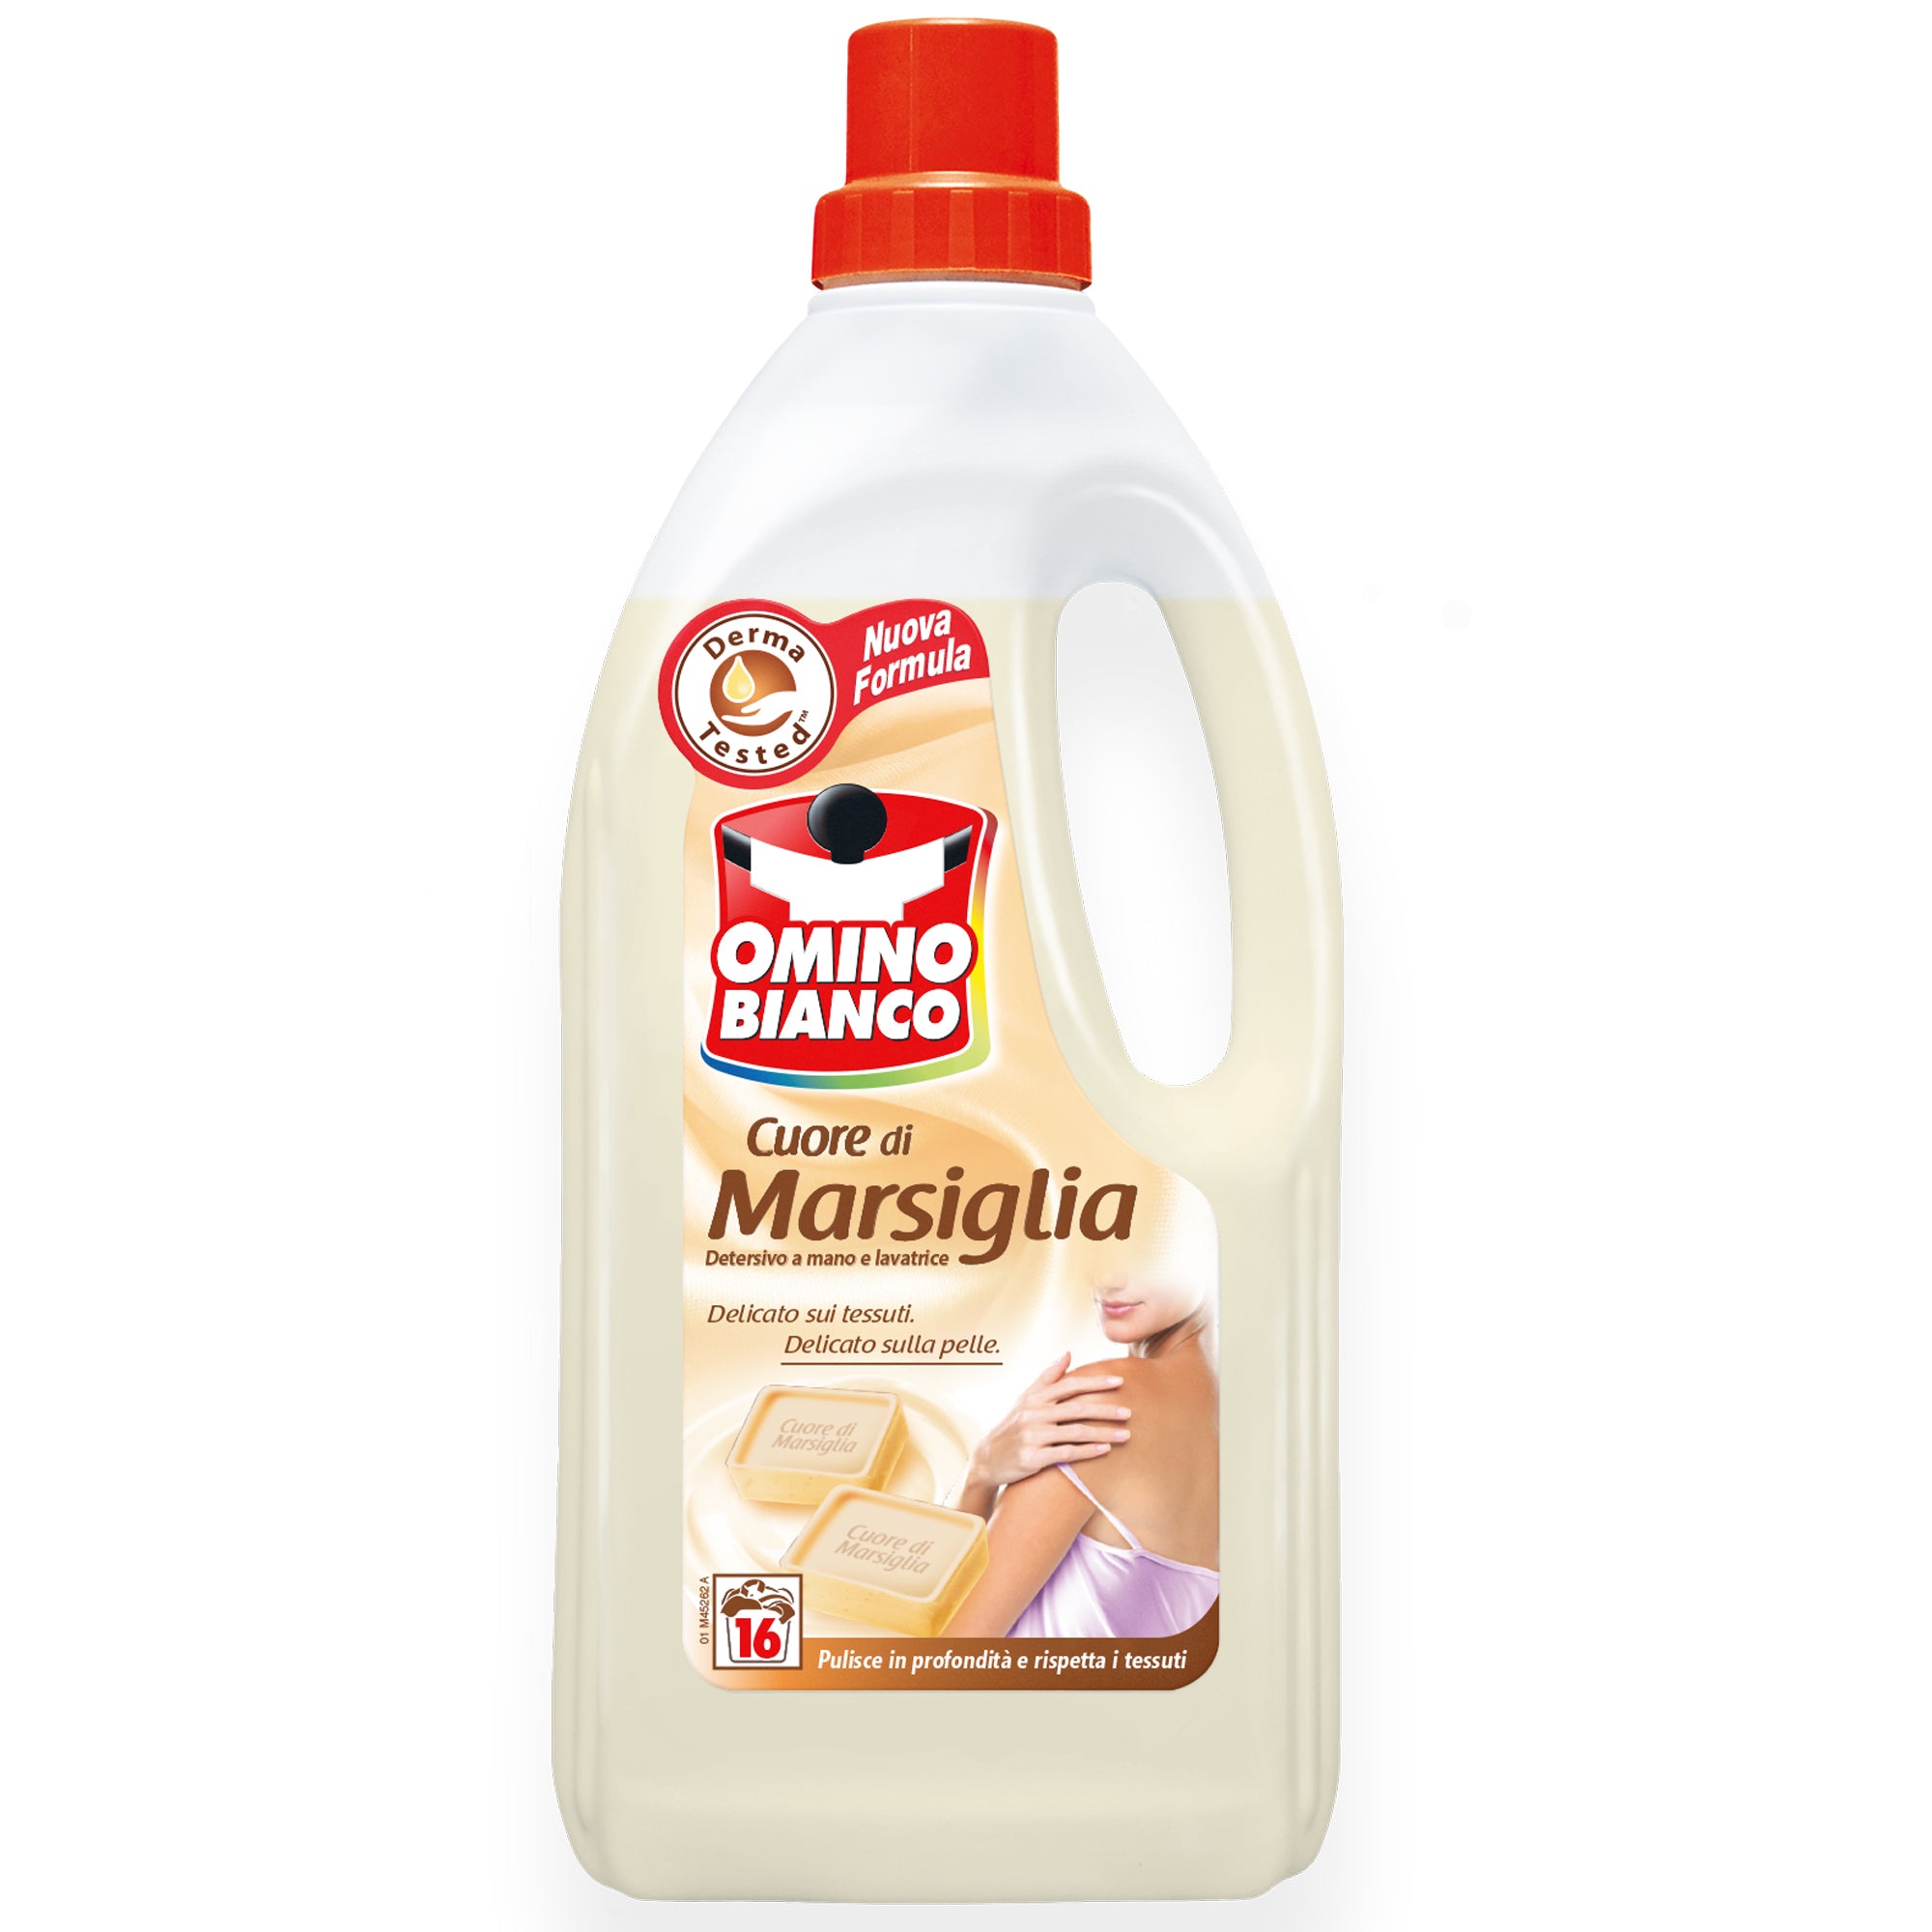 omino-bianco-detersivo-liquido-marsiglia-1lt-mano-lavatrice